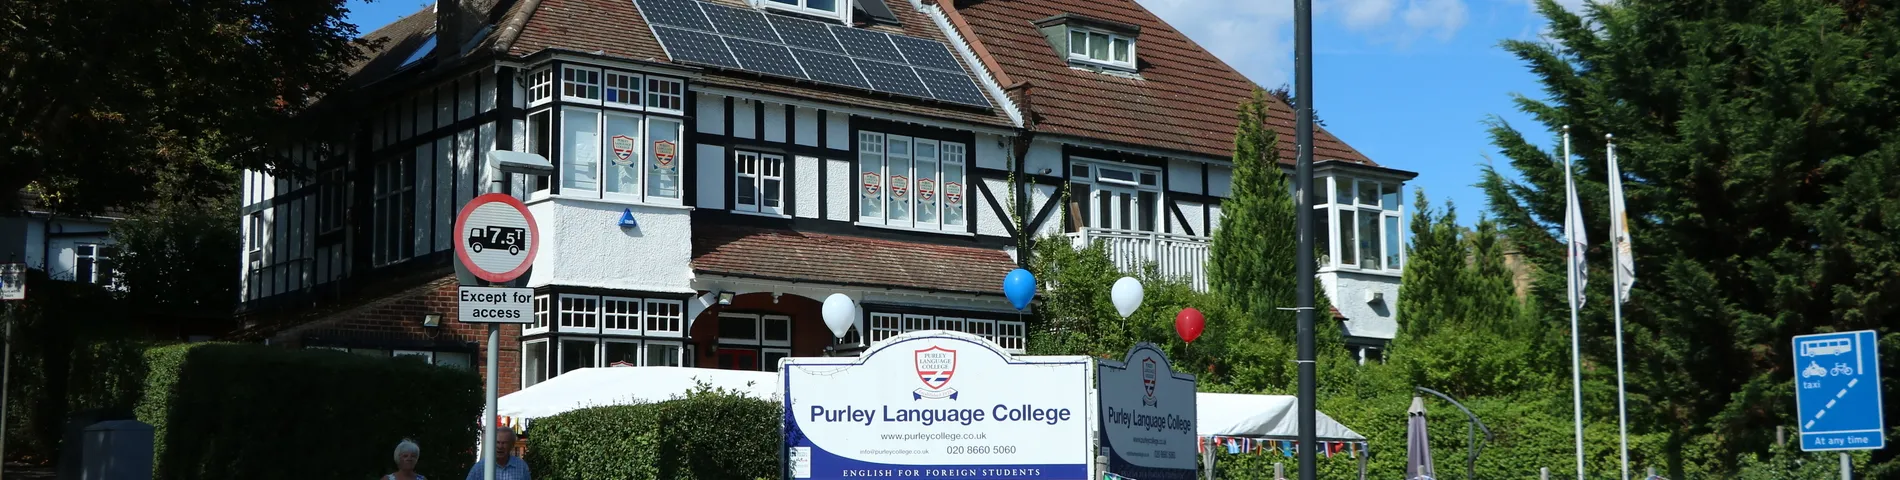 Purley Language College photo 1